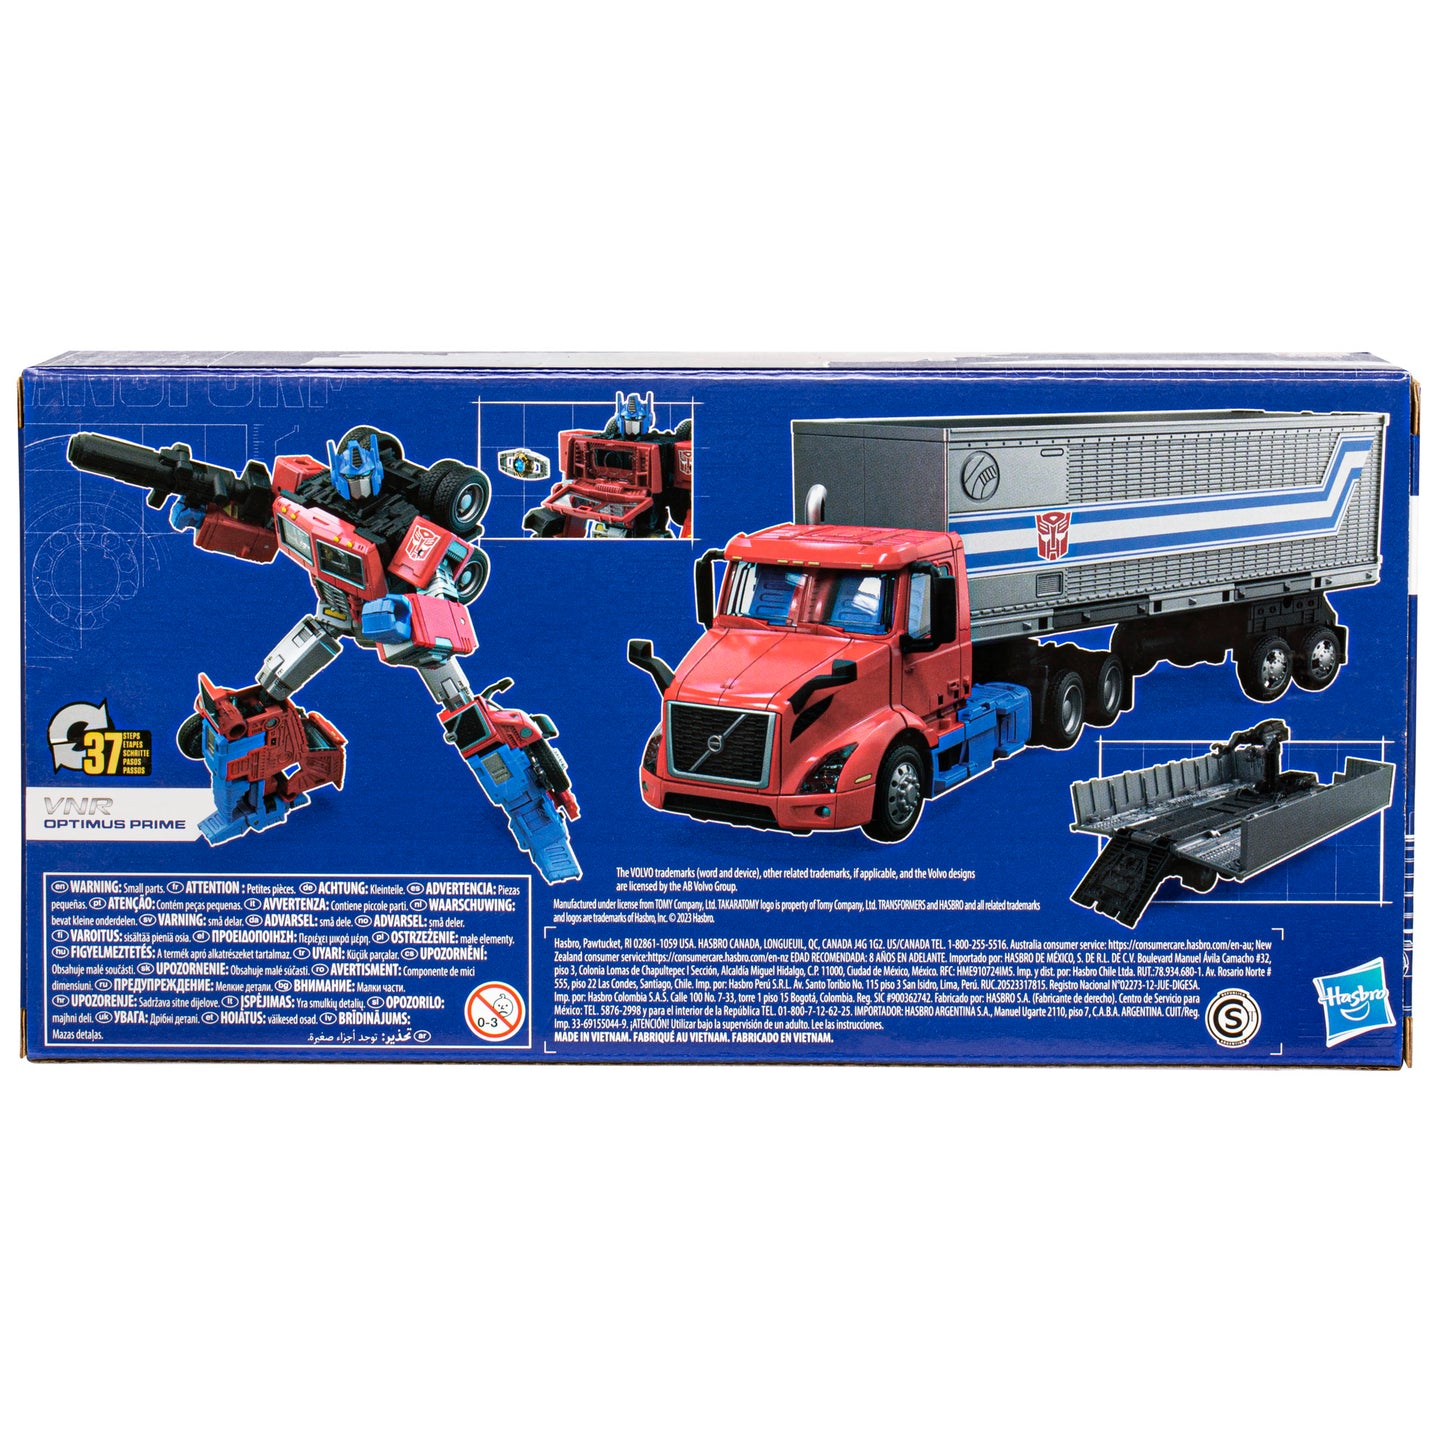 Transformers Generations - VNR Optimus Prime Action Figure Toy (Exclusive)